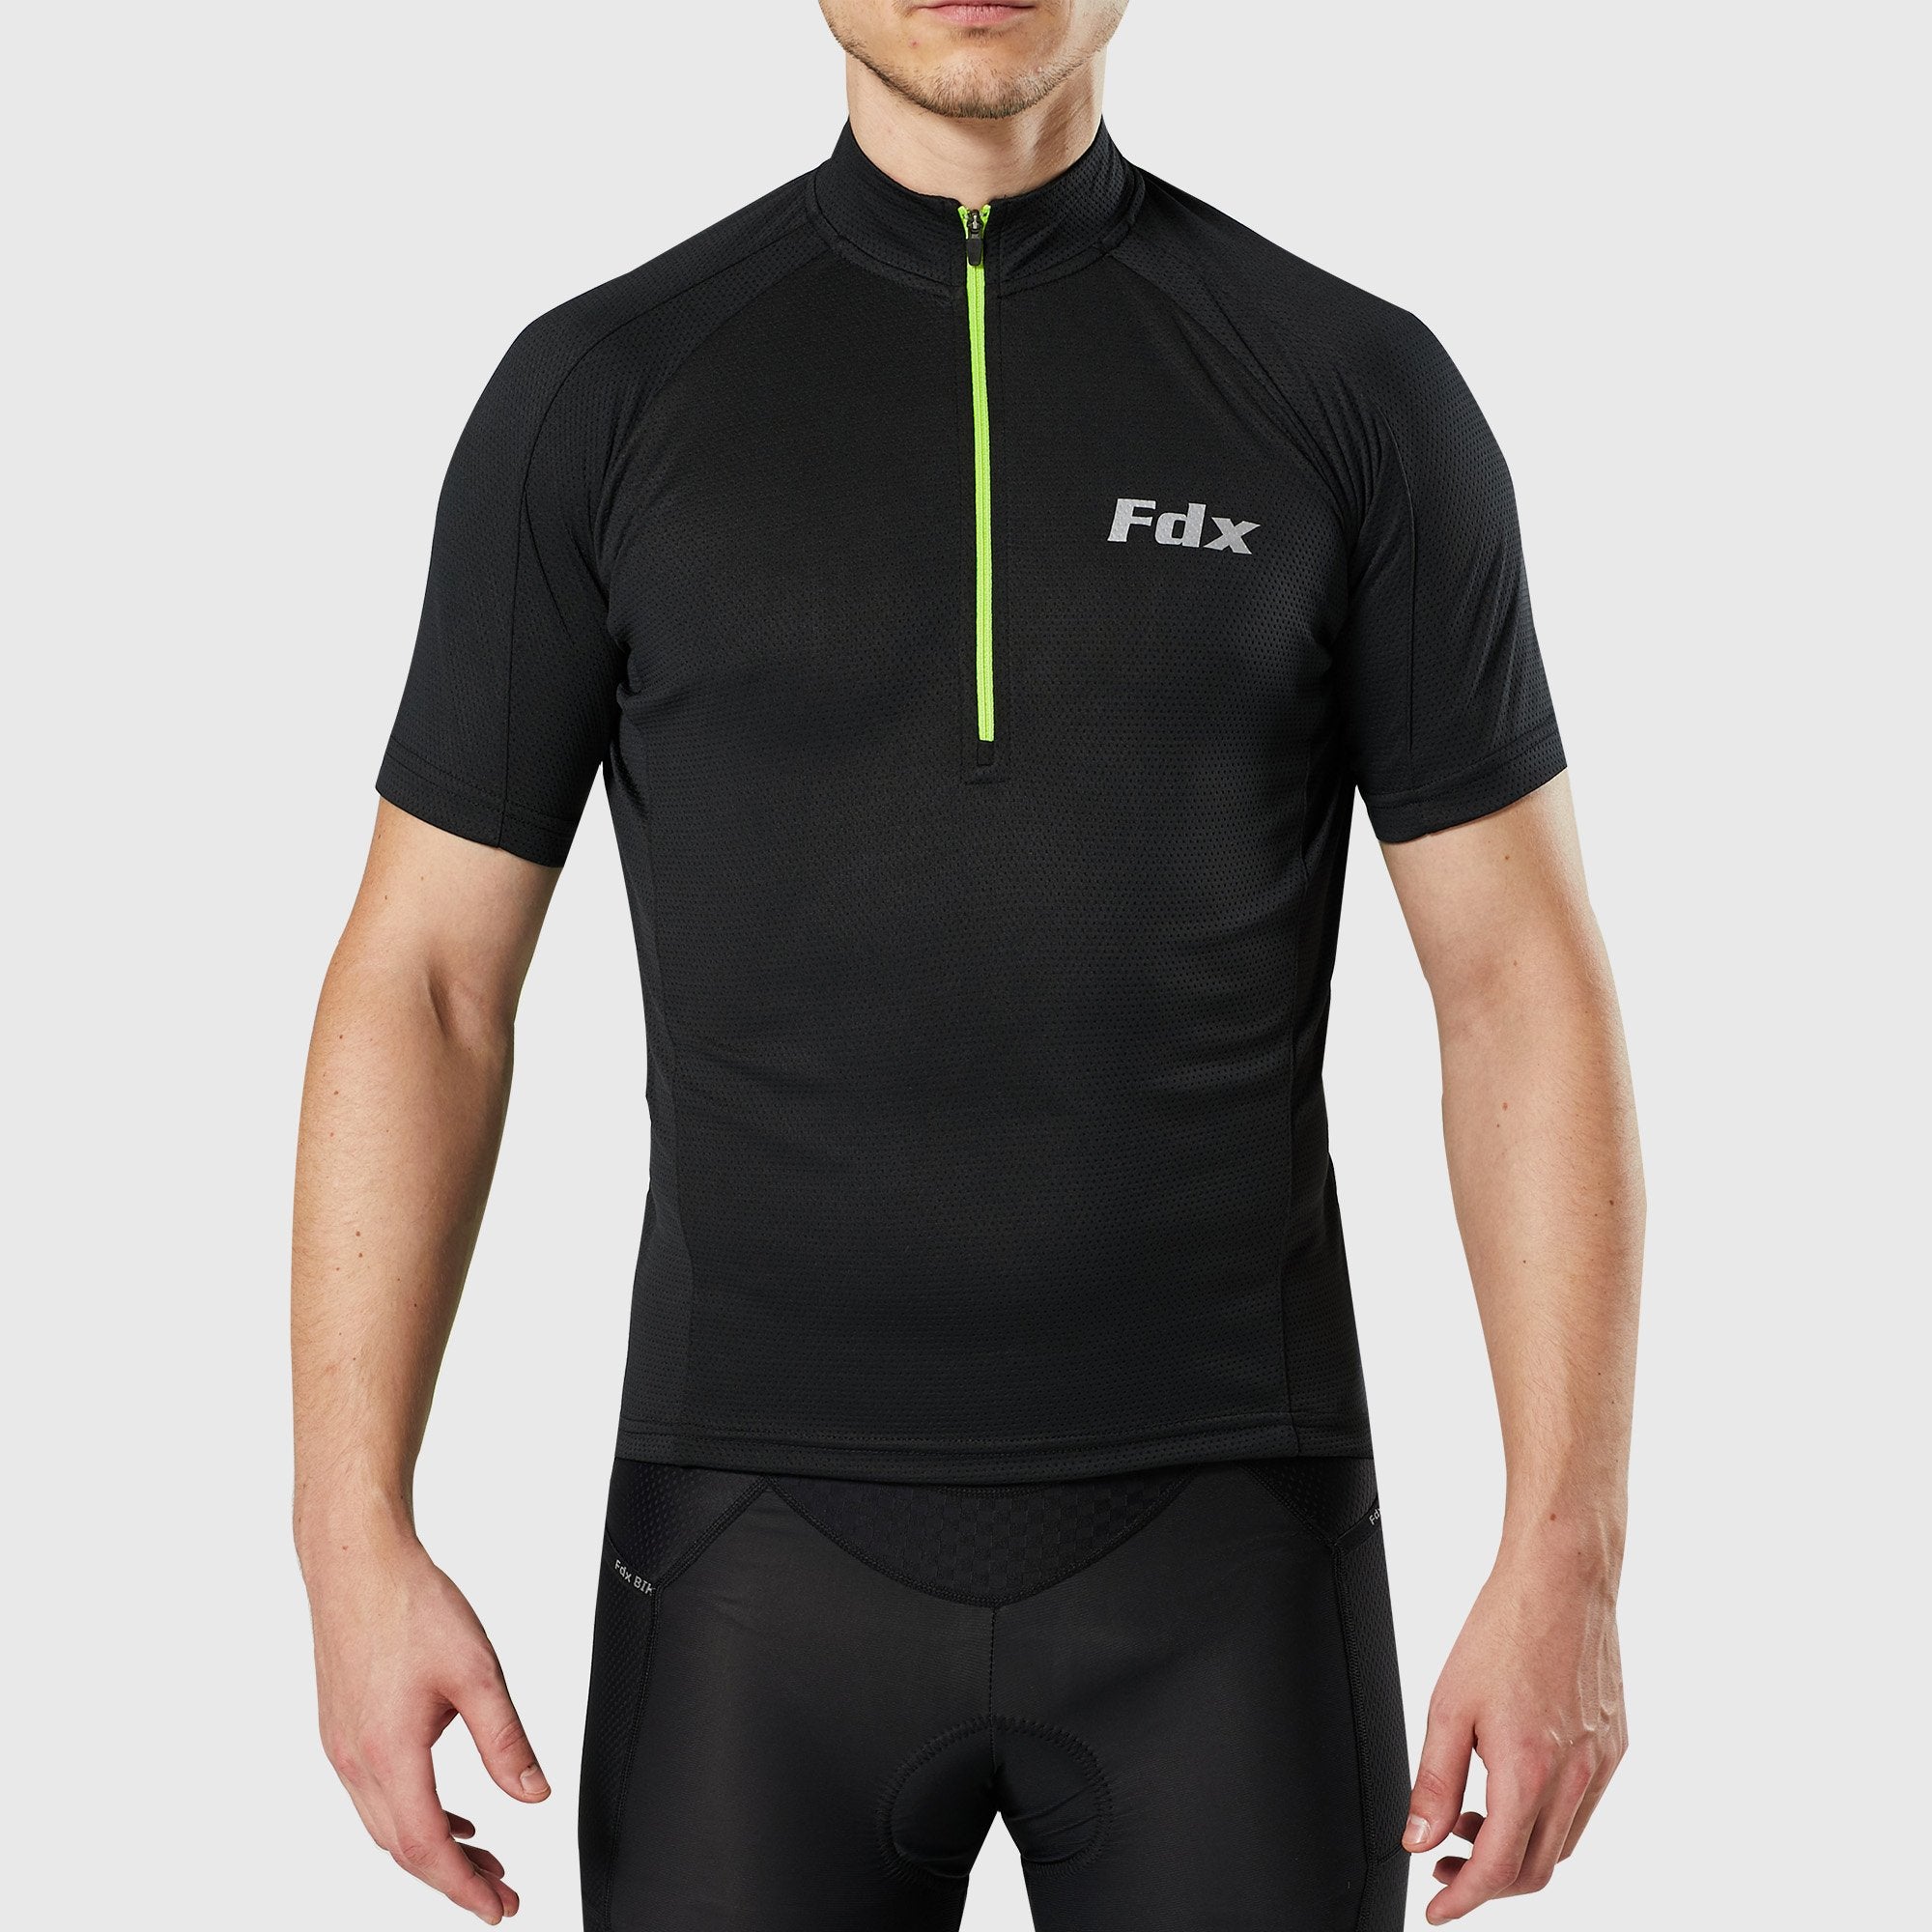 Fdx Pace Black Men's Short Sleeve Summer Cycling Jersey